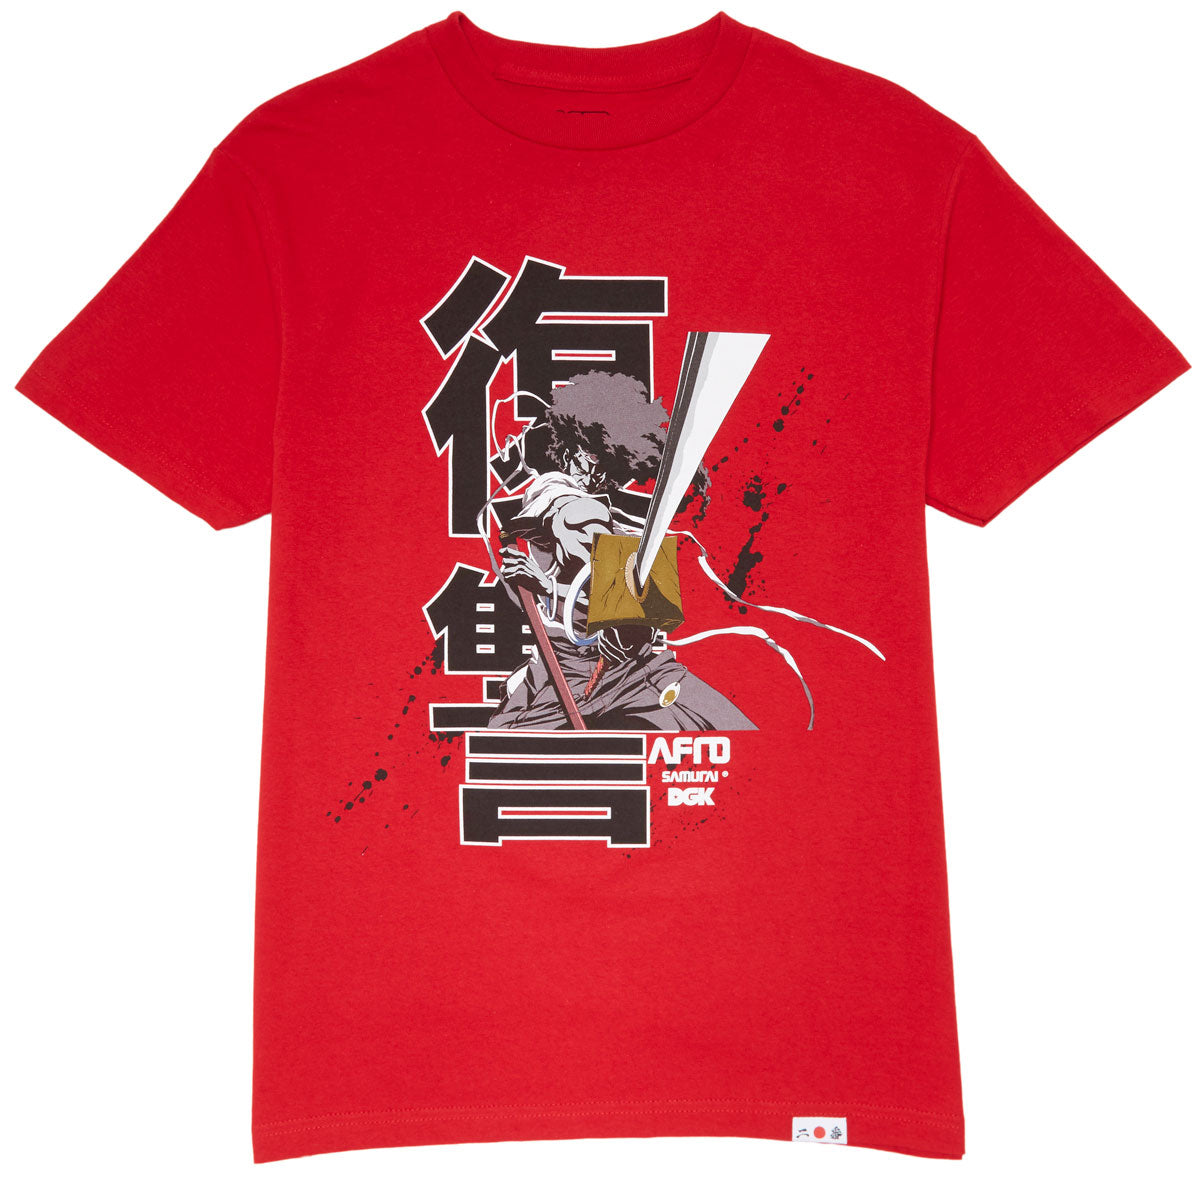 DGK x Afro Samurai Afro T-Shirt - Red image 2